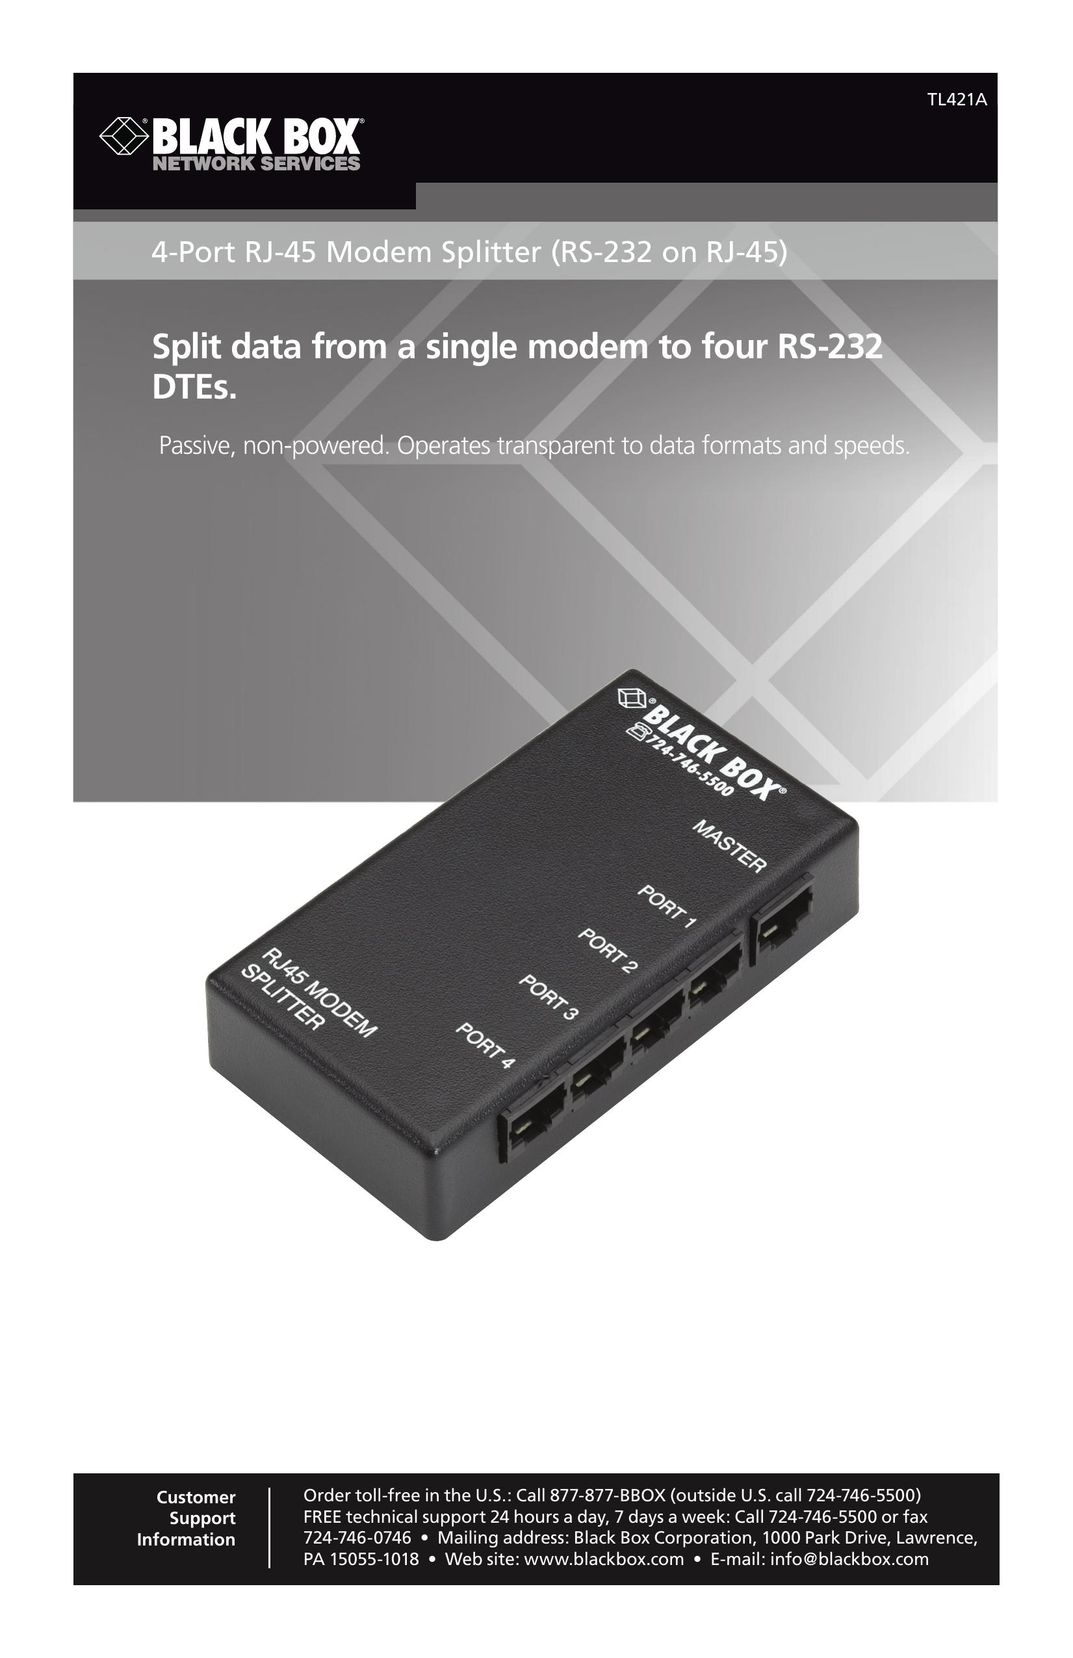 Black Box 4-Port RJ-45 Modem Splitter (RS-232 on RJ-45) Network Hardware User Manual